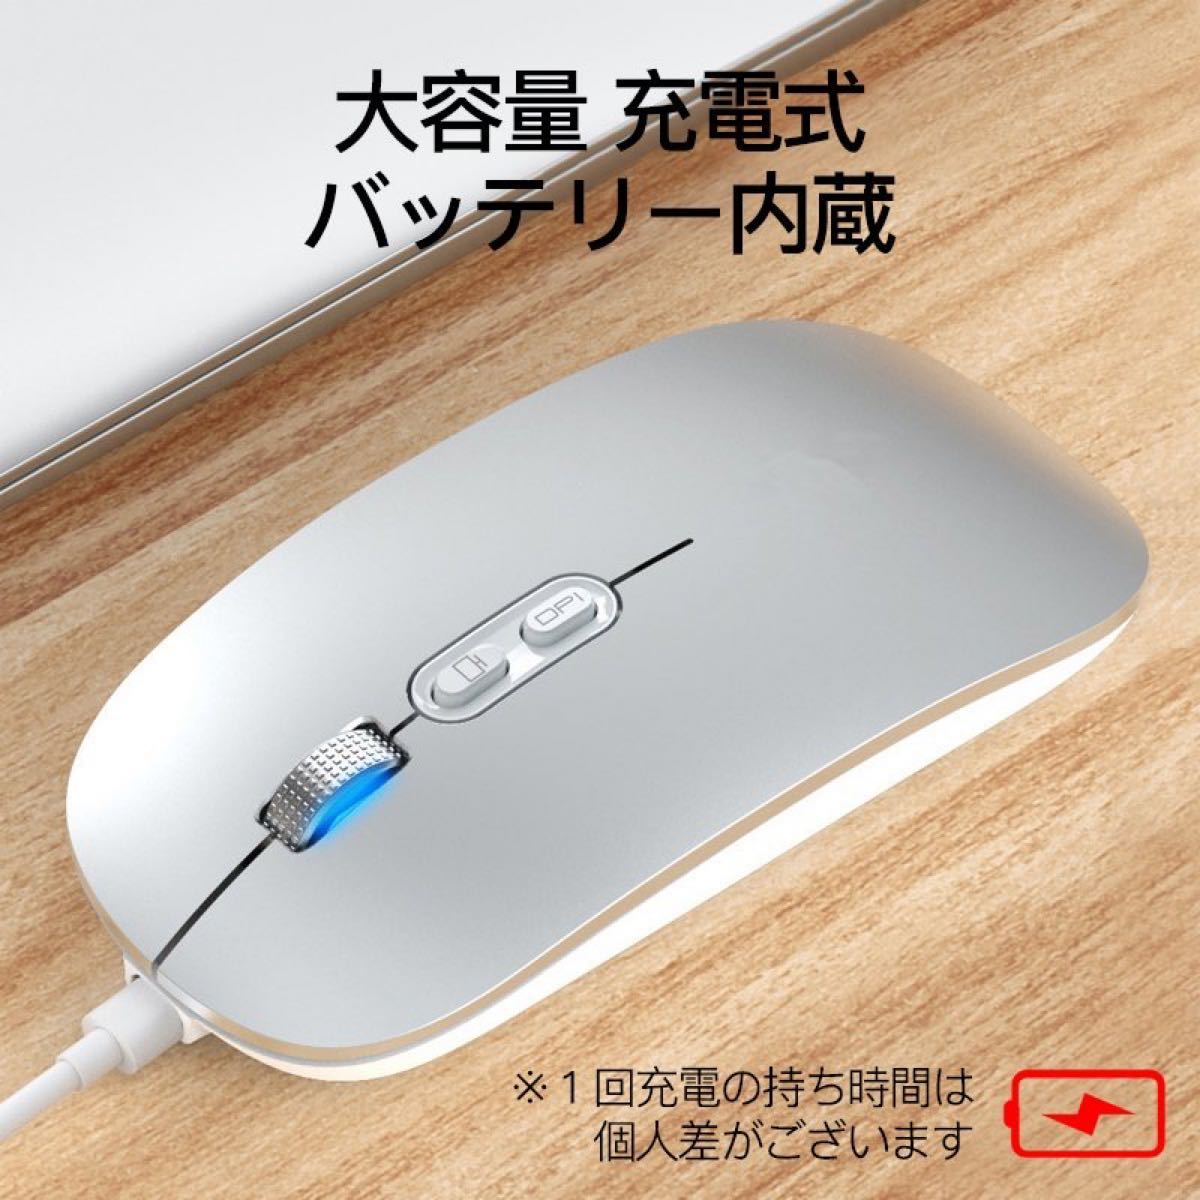 deマウス ワイヤレスマウス 無線マウス Bluetooth 充電式 薄型 静音